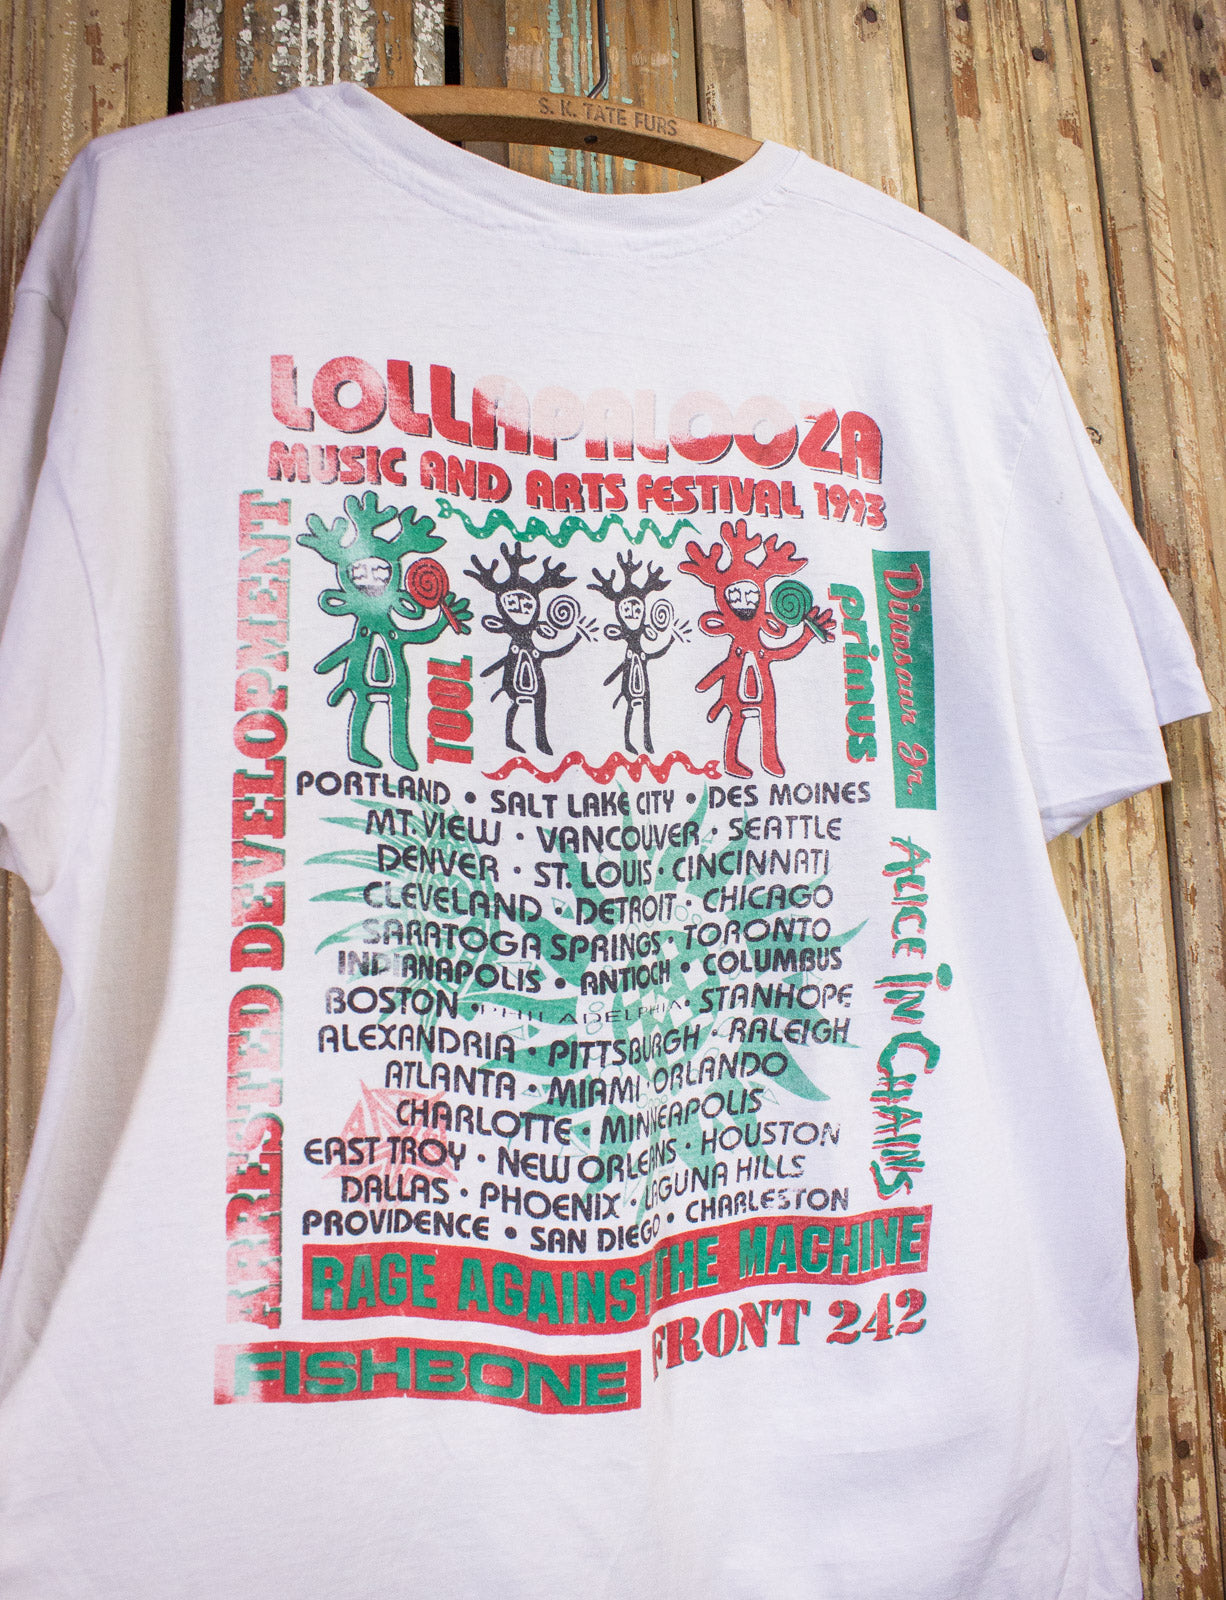 Vintage Lollapalooza Festival Concert T Shirt 1993 White Large